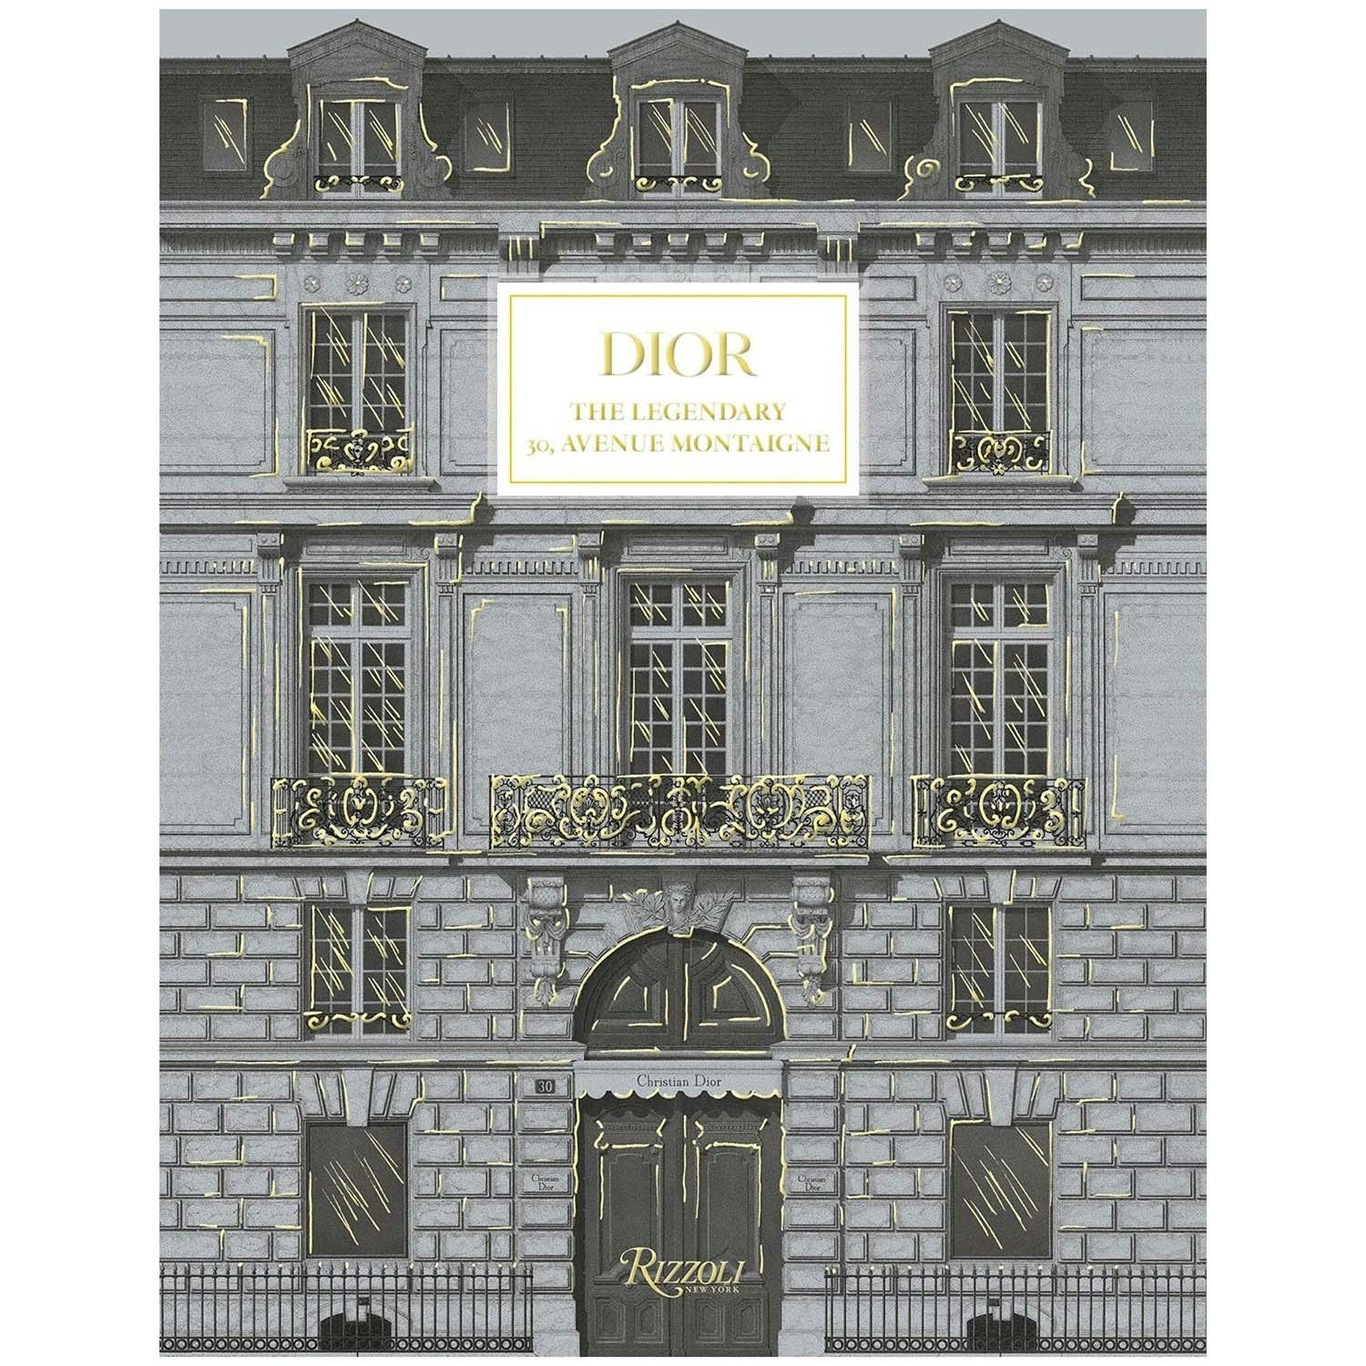 Dior: The Legendary 30, Avenue Montaigne Buch